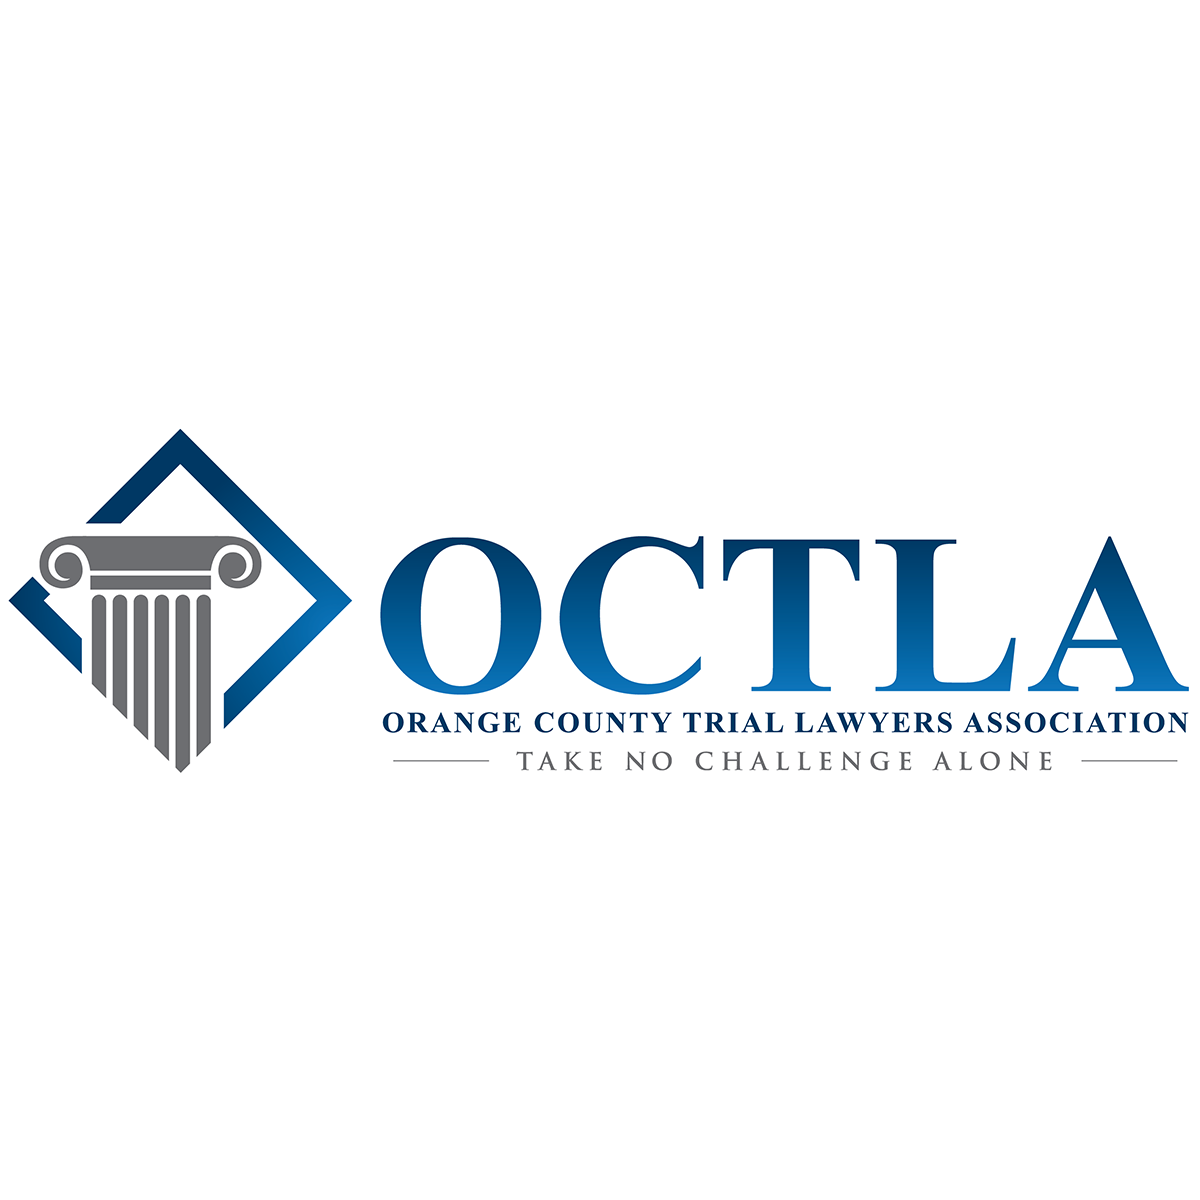 OCTLA - Orange County Trial Lawyers Association Logo